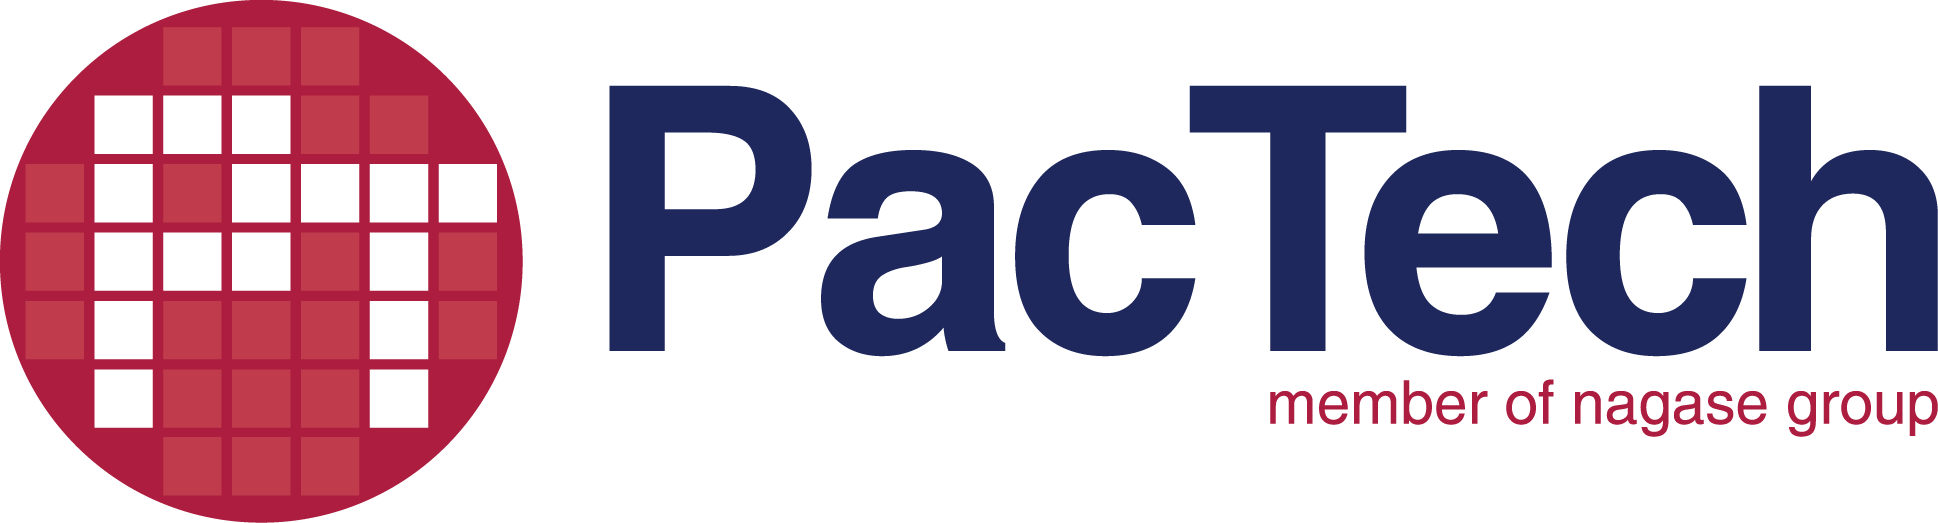 20_PacTech_Logo_CS3_mit_tra.png